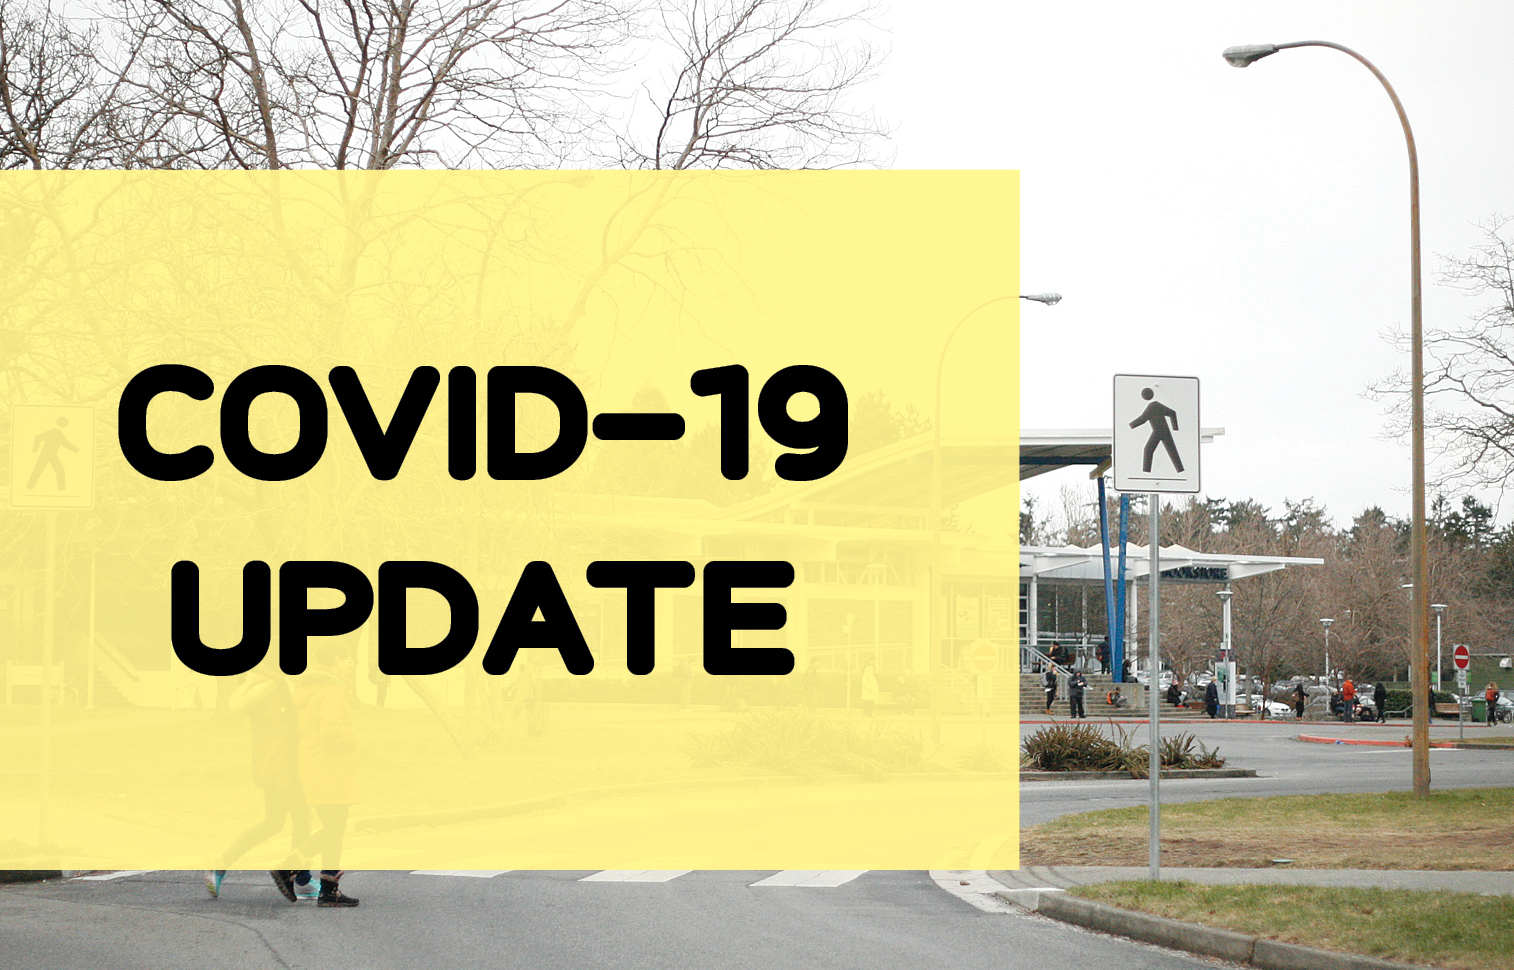 covid-19 update uvic graphic